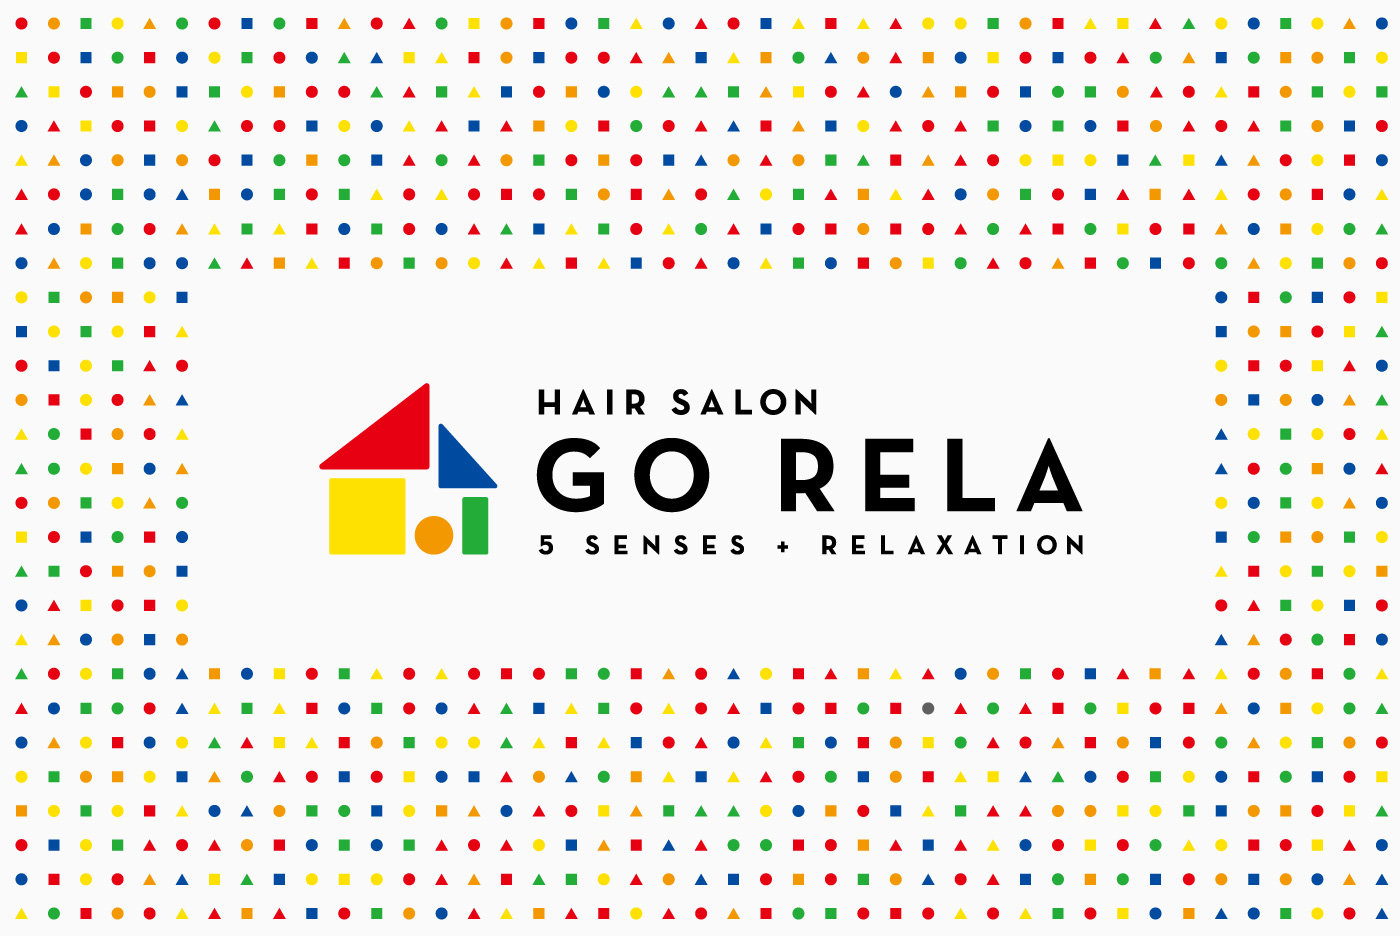 GORELA美容室サロンのロゴタイポデザイン横組